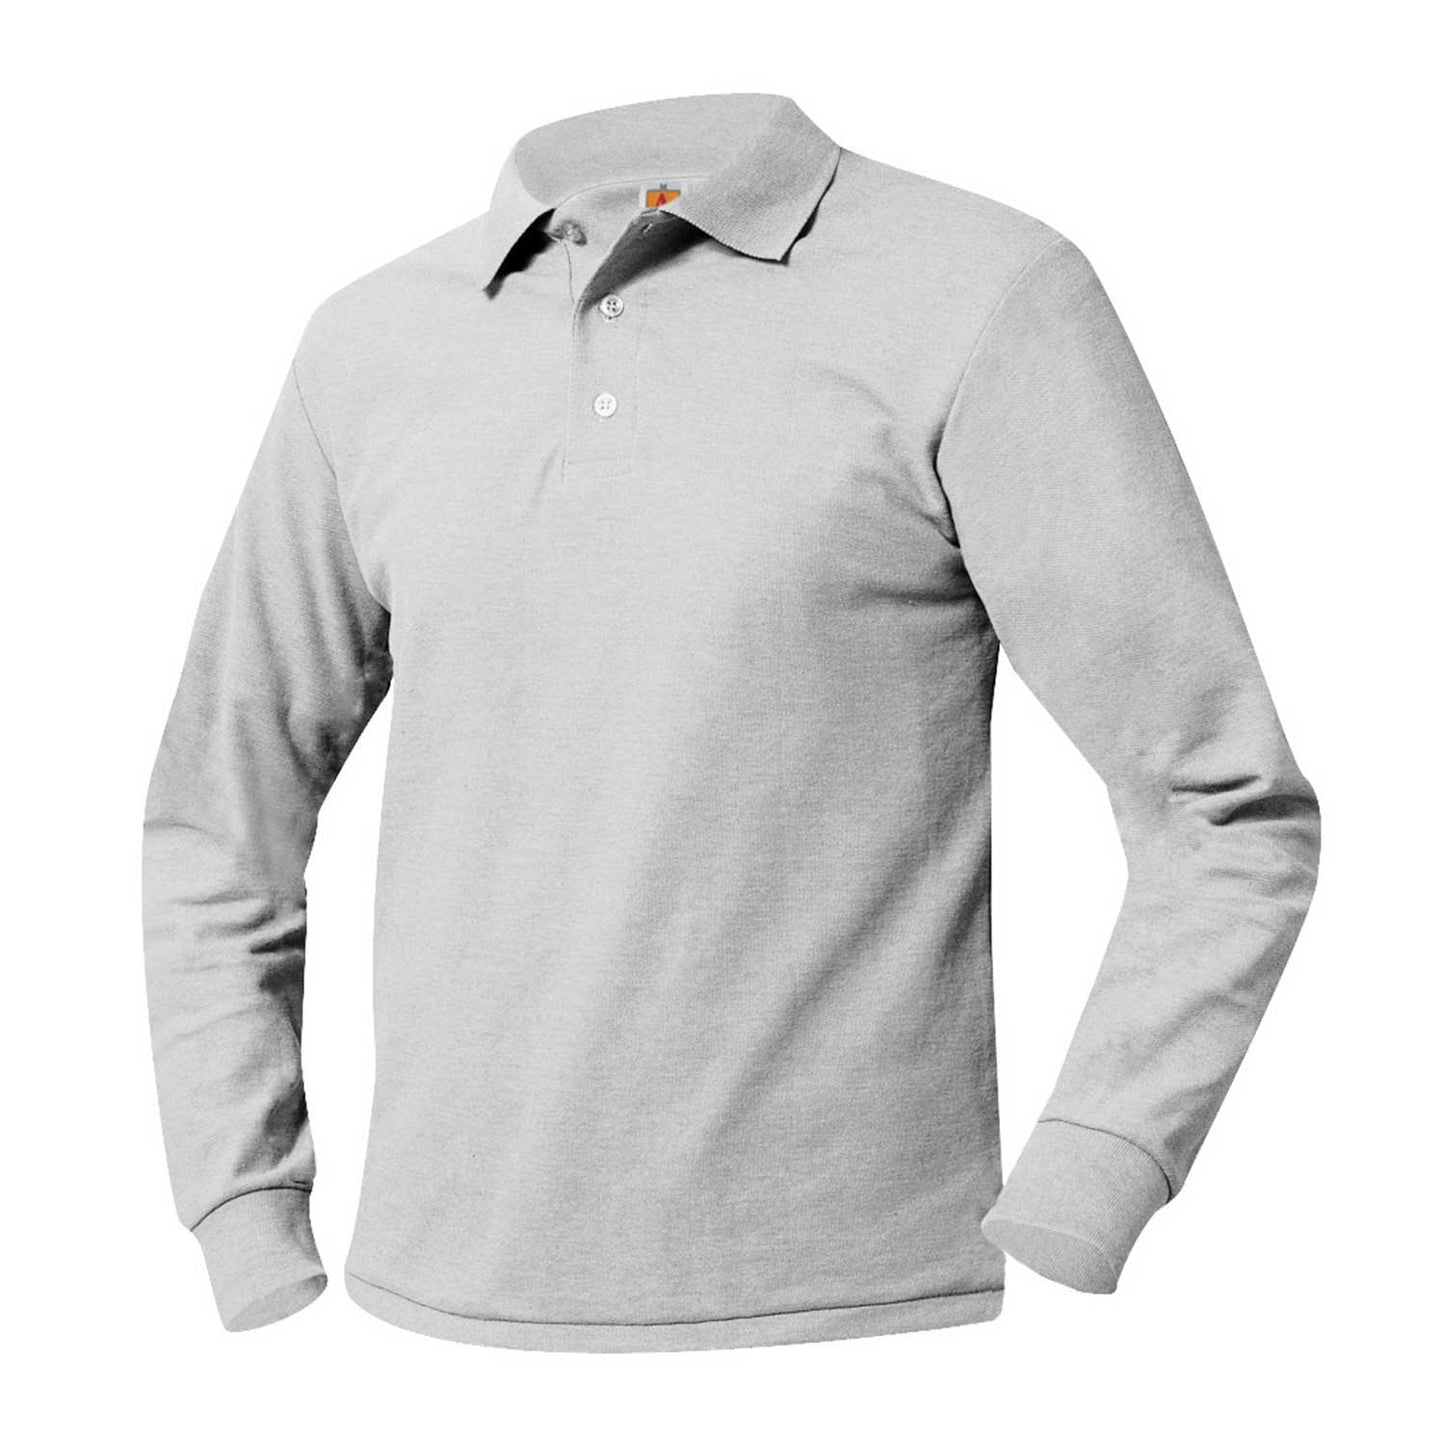 Unisex Pique Polo Shirt, Long Sleeves, Ribbed Cuffs w/Logo - 1107